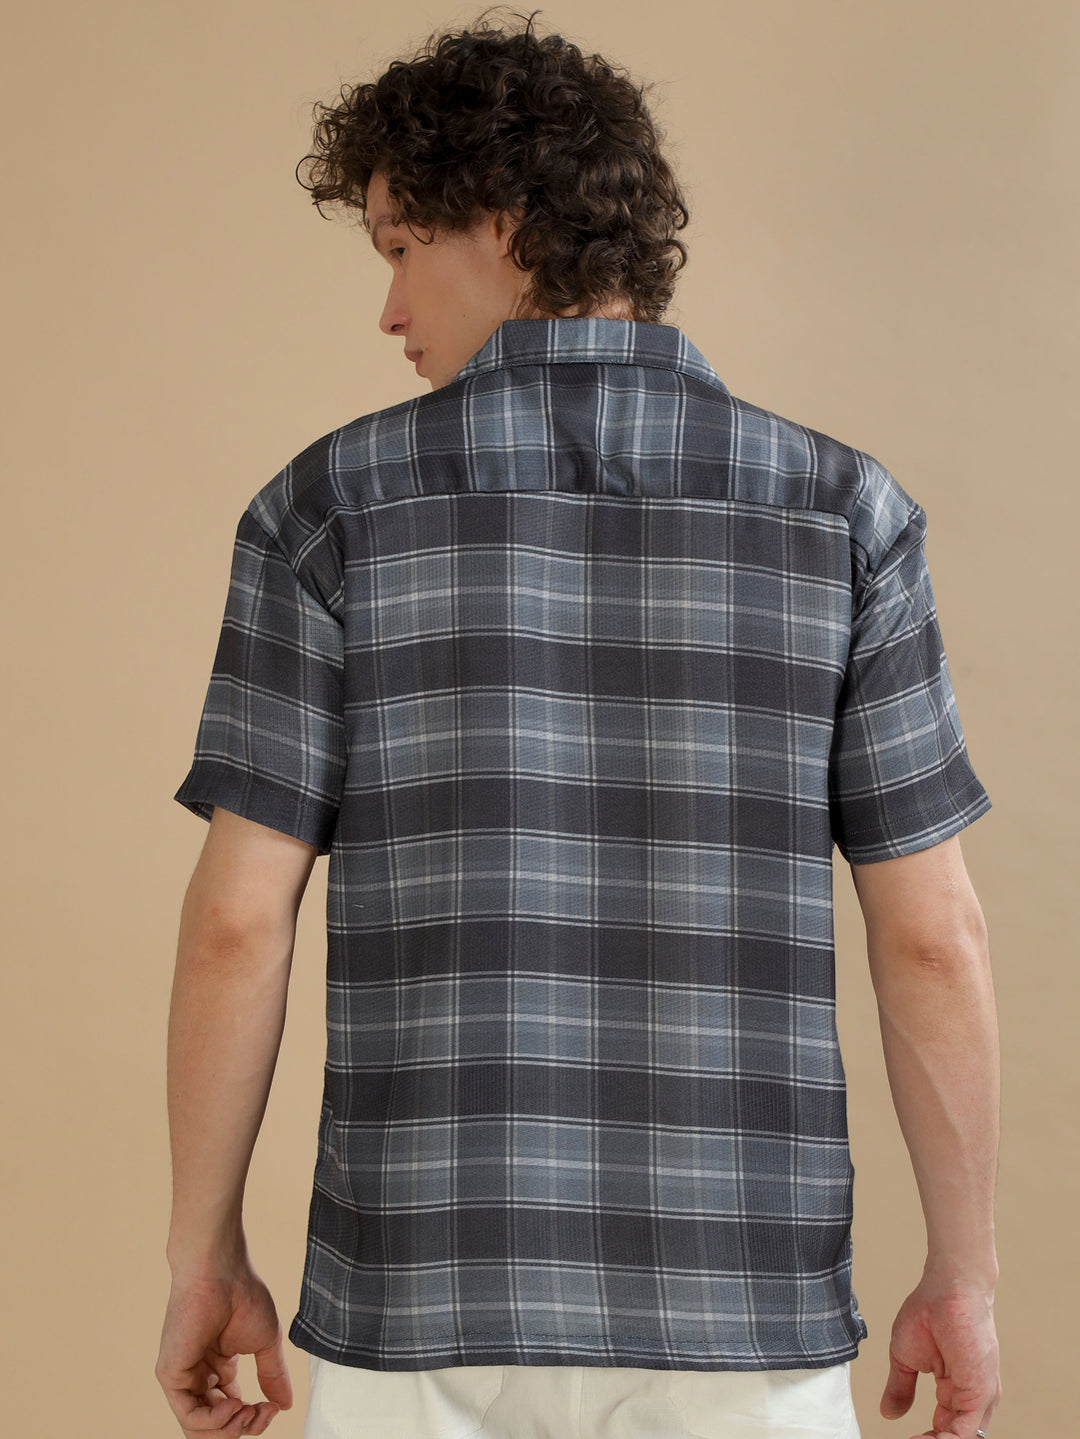 Tartan Square Slate Grey Checks Oversize Shirt Oversize Printed Shirt Bushirt   